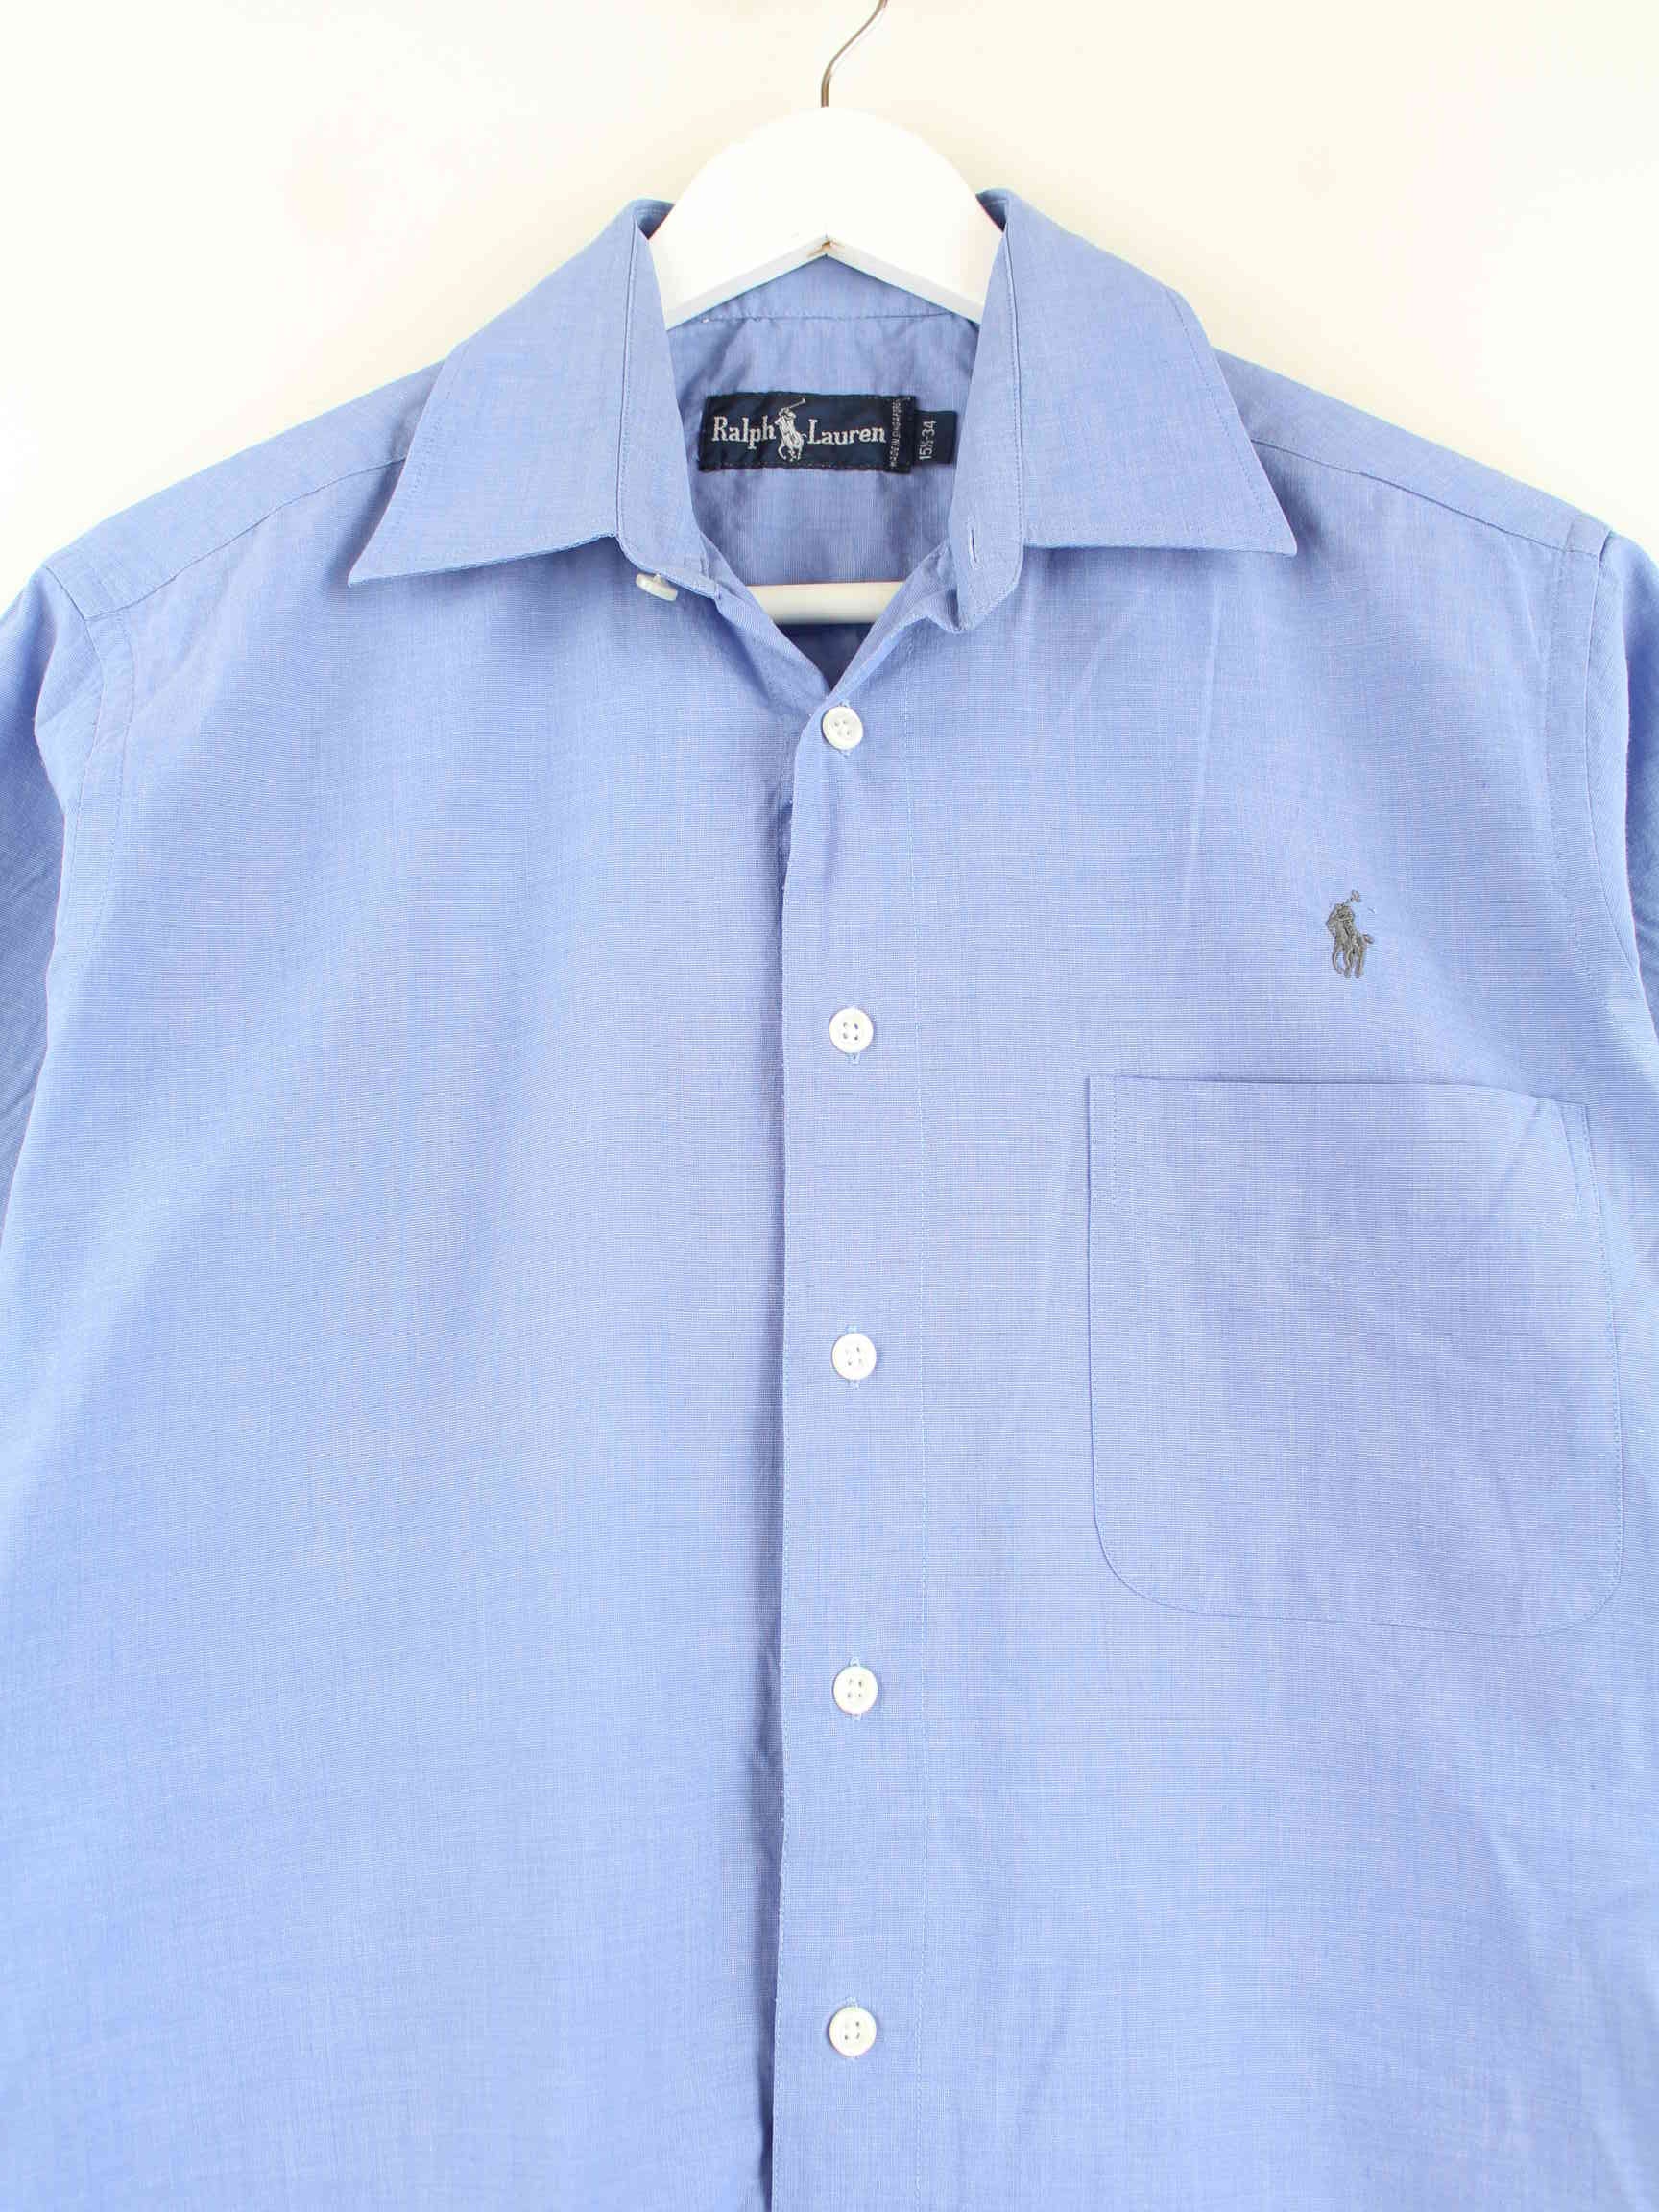 Ralph Lauren 90s Vintage Kurzarm Hemd Blau L (detail image 1)